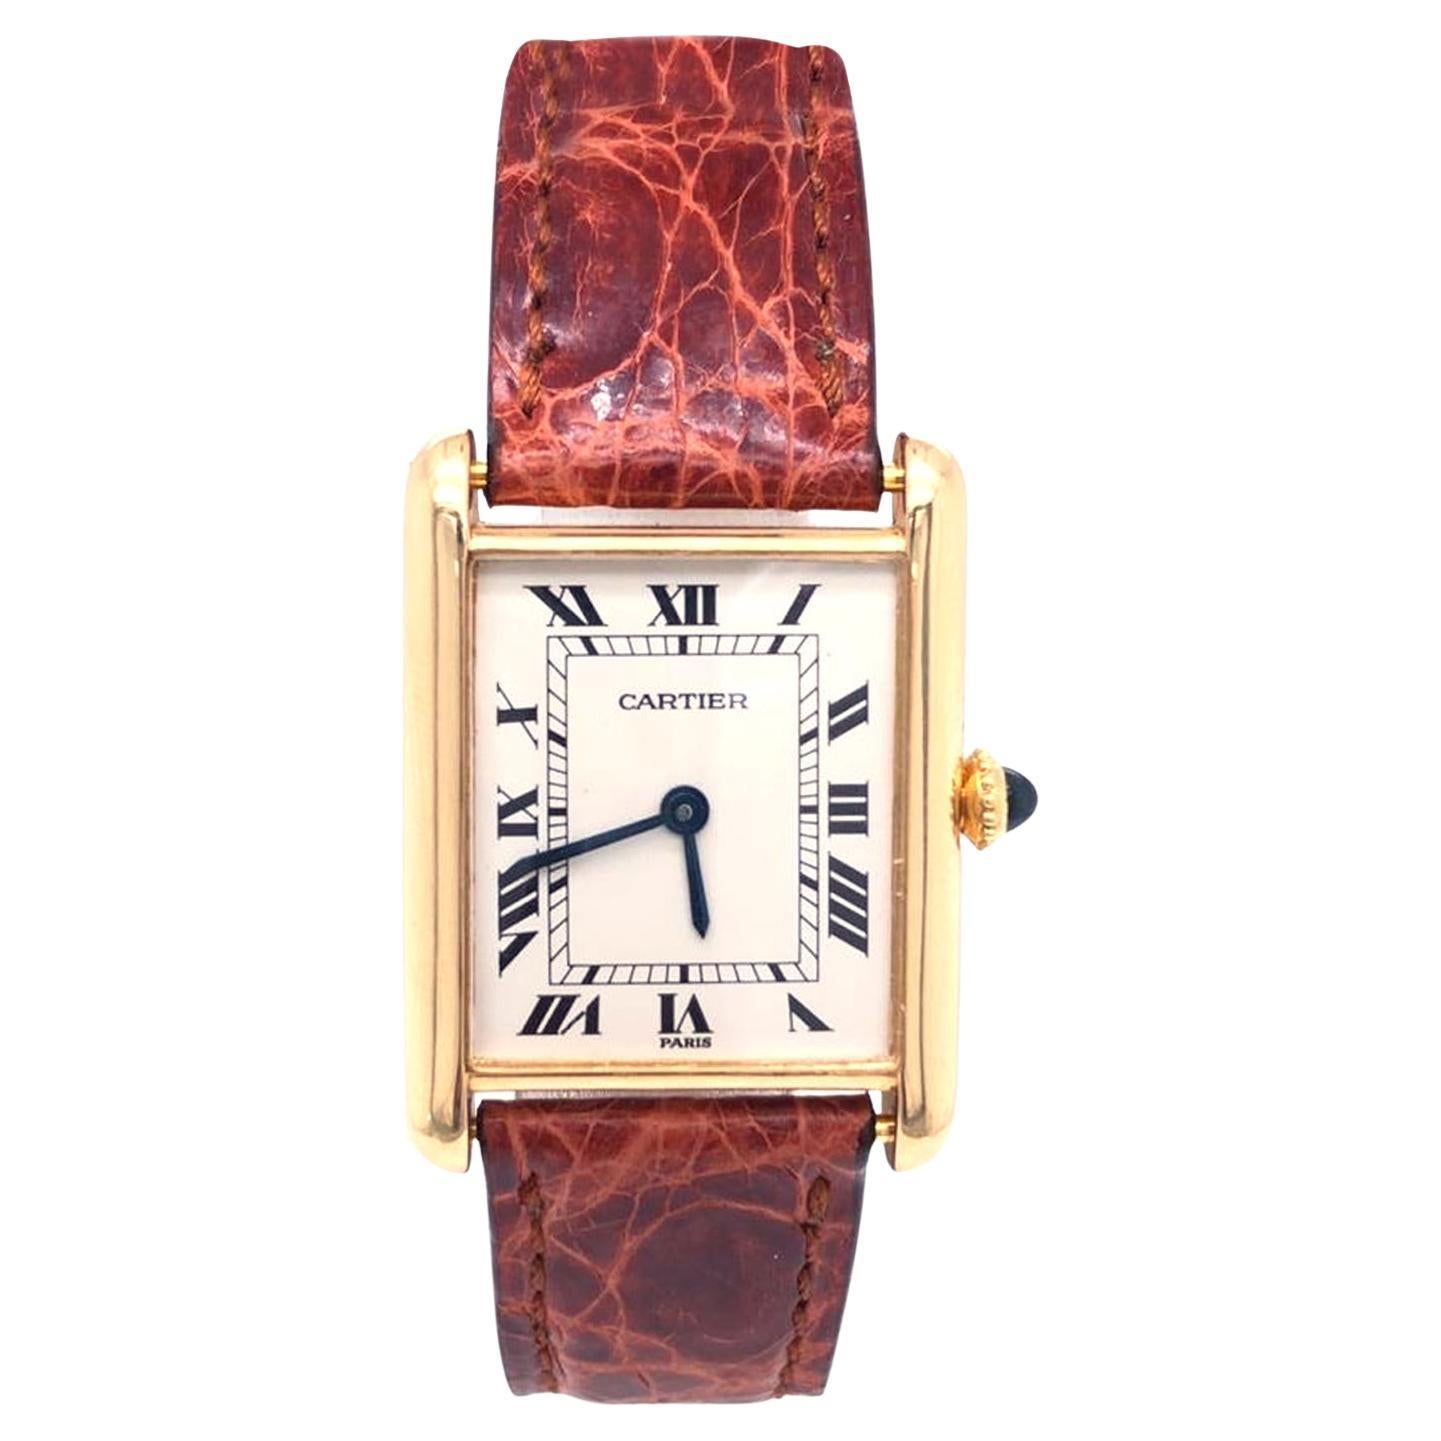 Cartier Tank Louis 78086 Paris Dial 18k Yellow Gold Vintage Manual Winding Watch